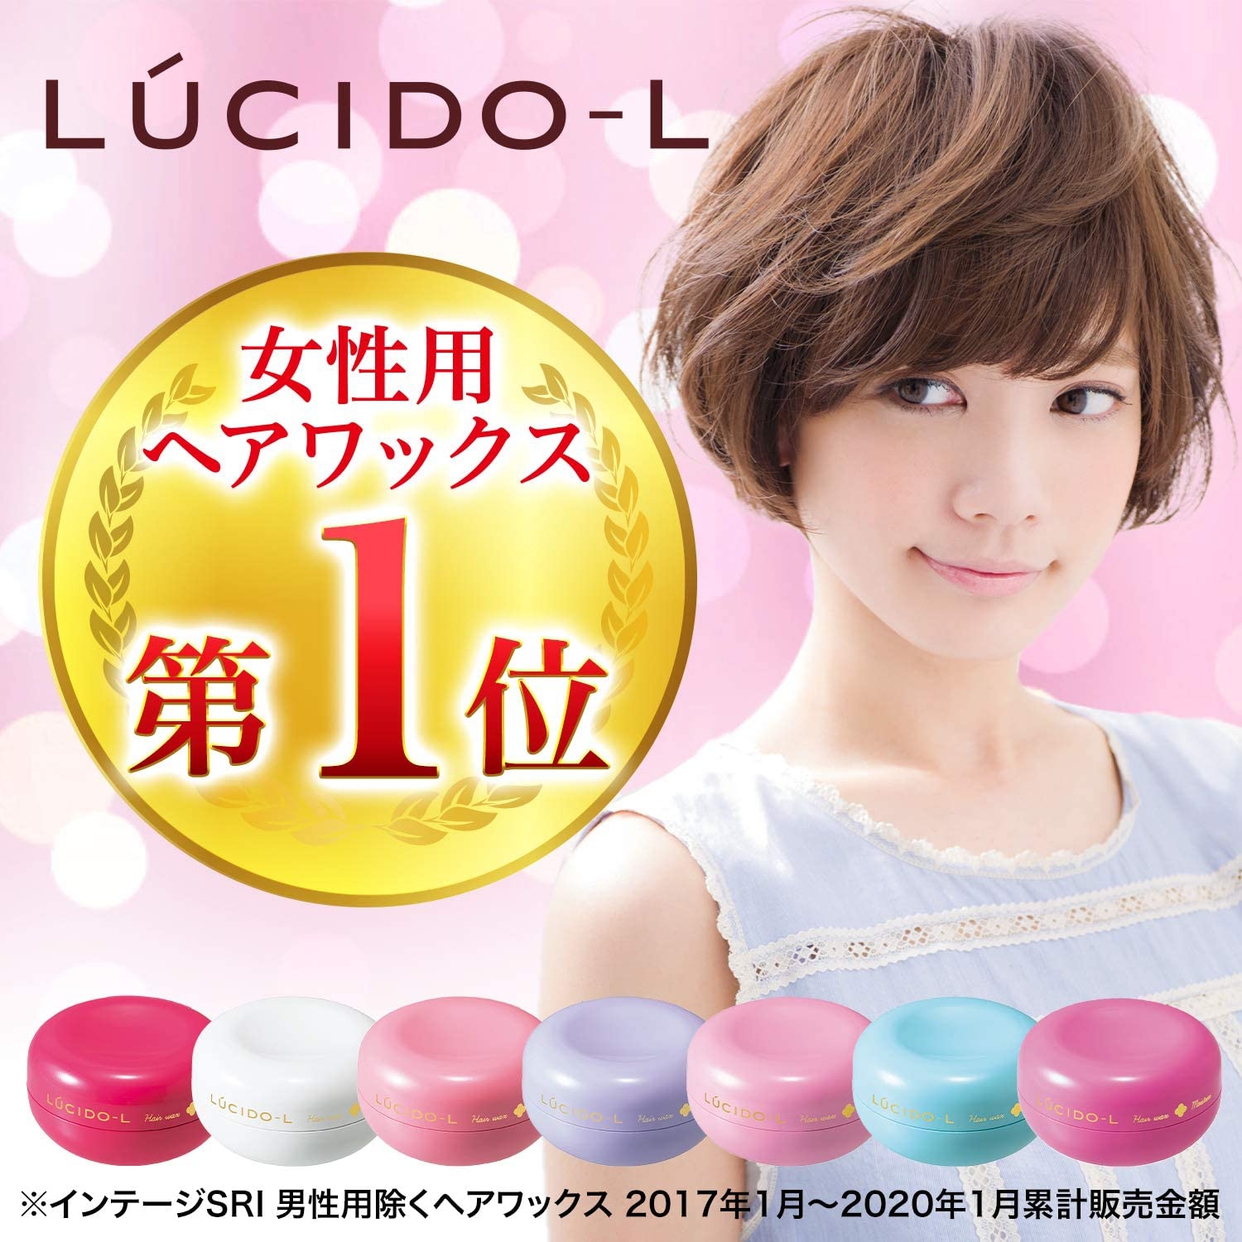 LUCIDO-L(ルシードエル) #アレンジアップワックスの商品画像サムネ2 